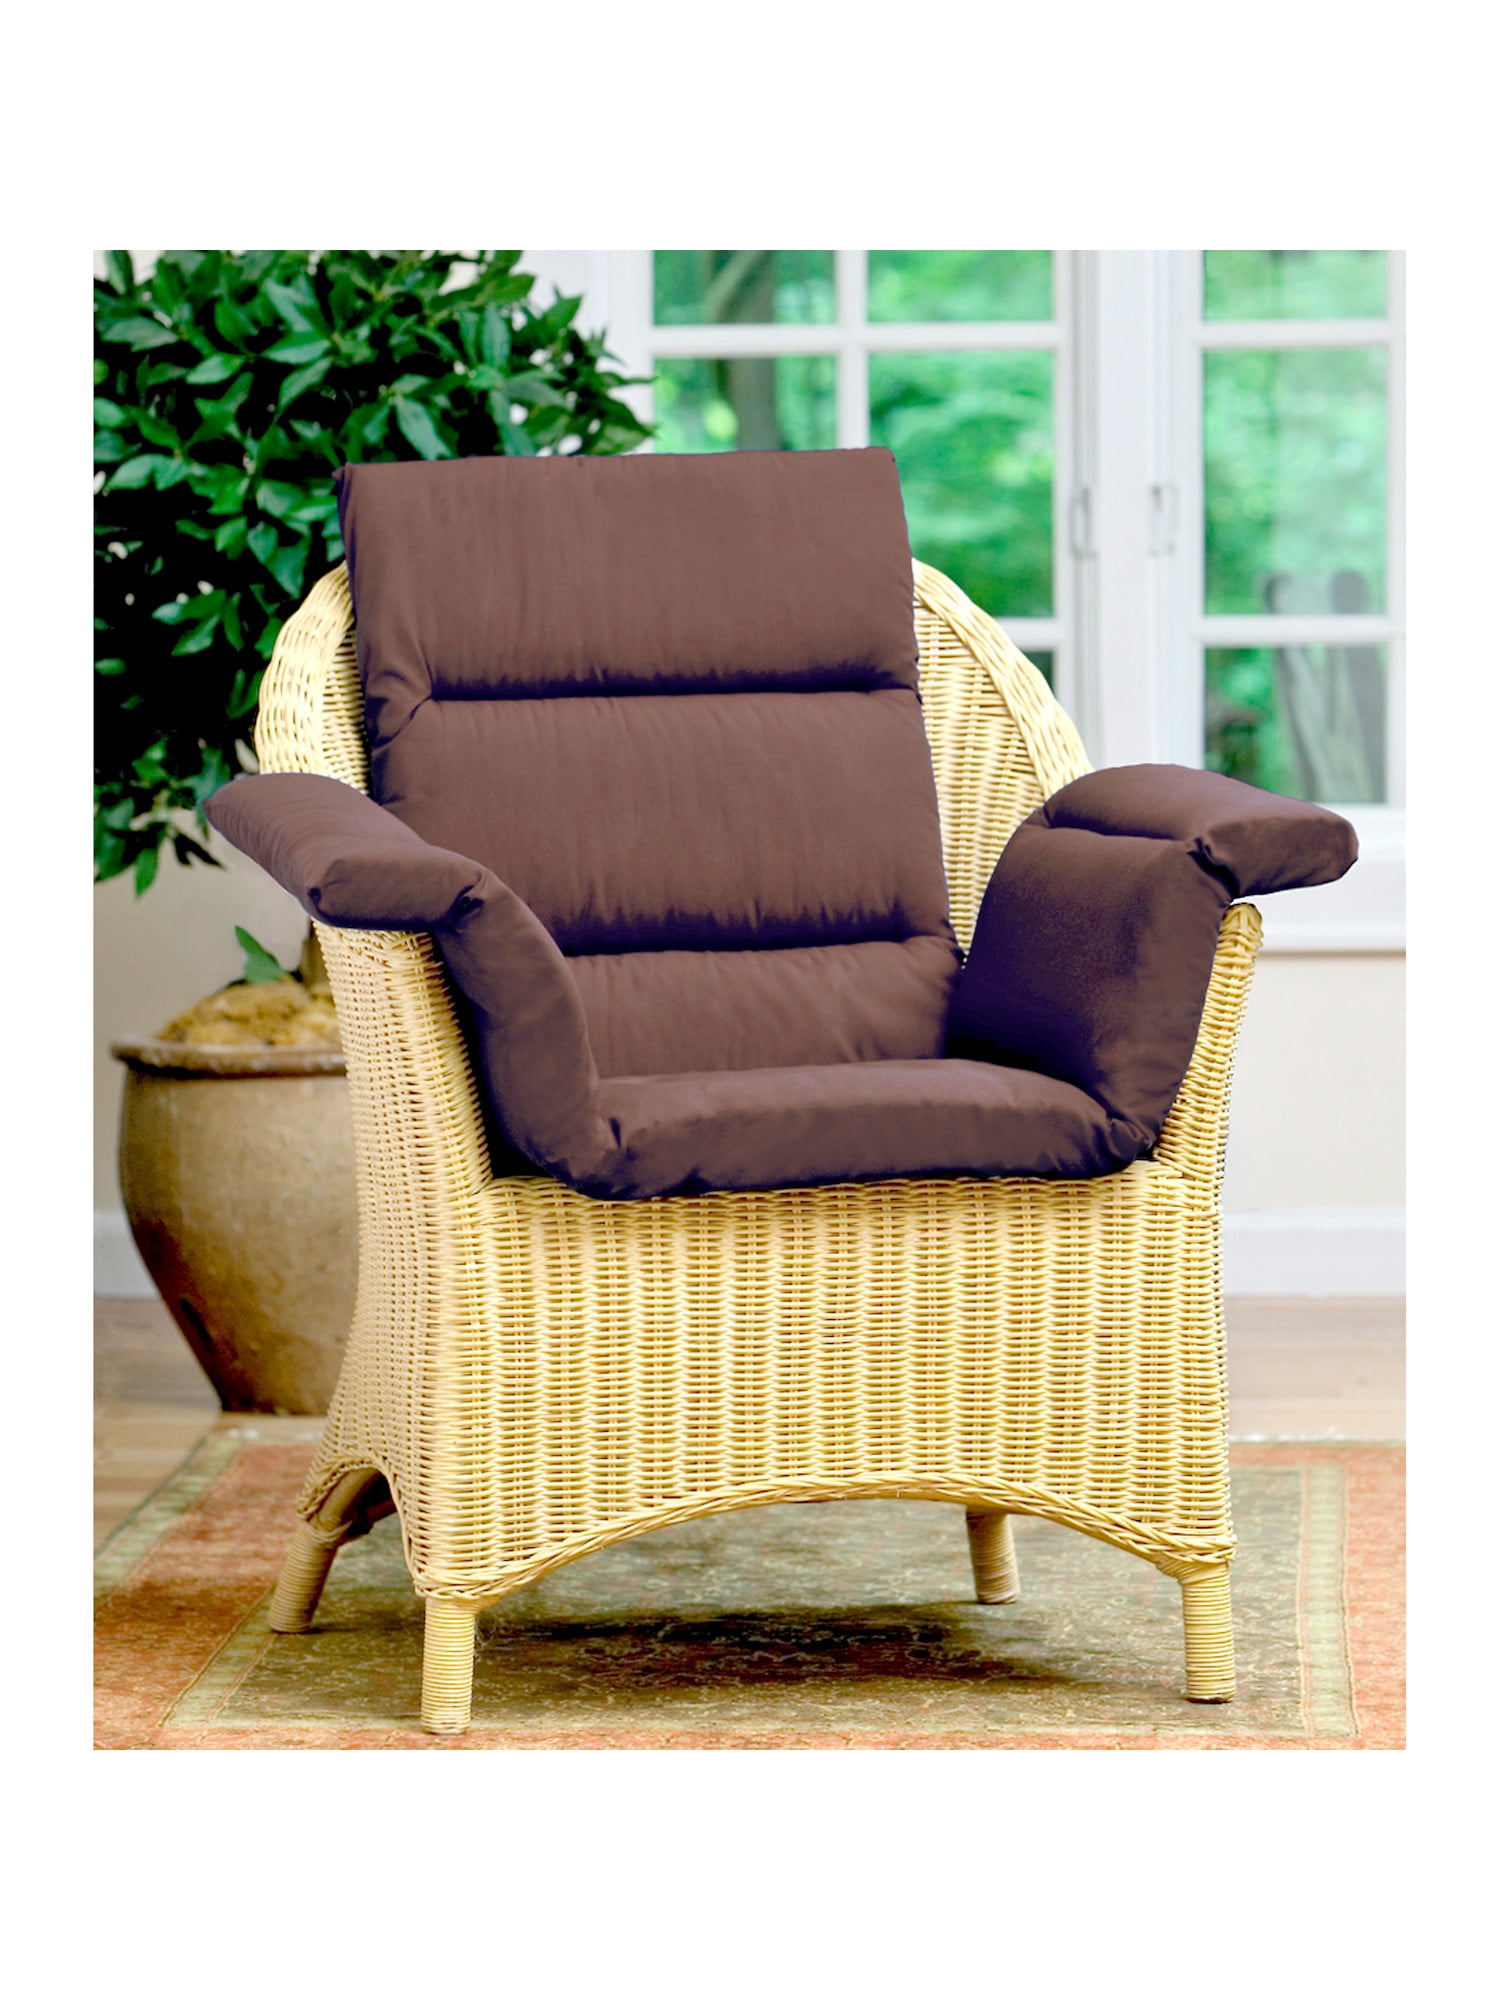 Makrozoia Wheelchair Cushions for Pressure Relief - Pressure Cushion for  Pressure Sores - Inflatable Seat Cushion for Recliner